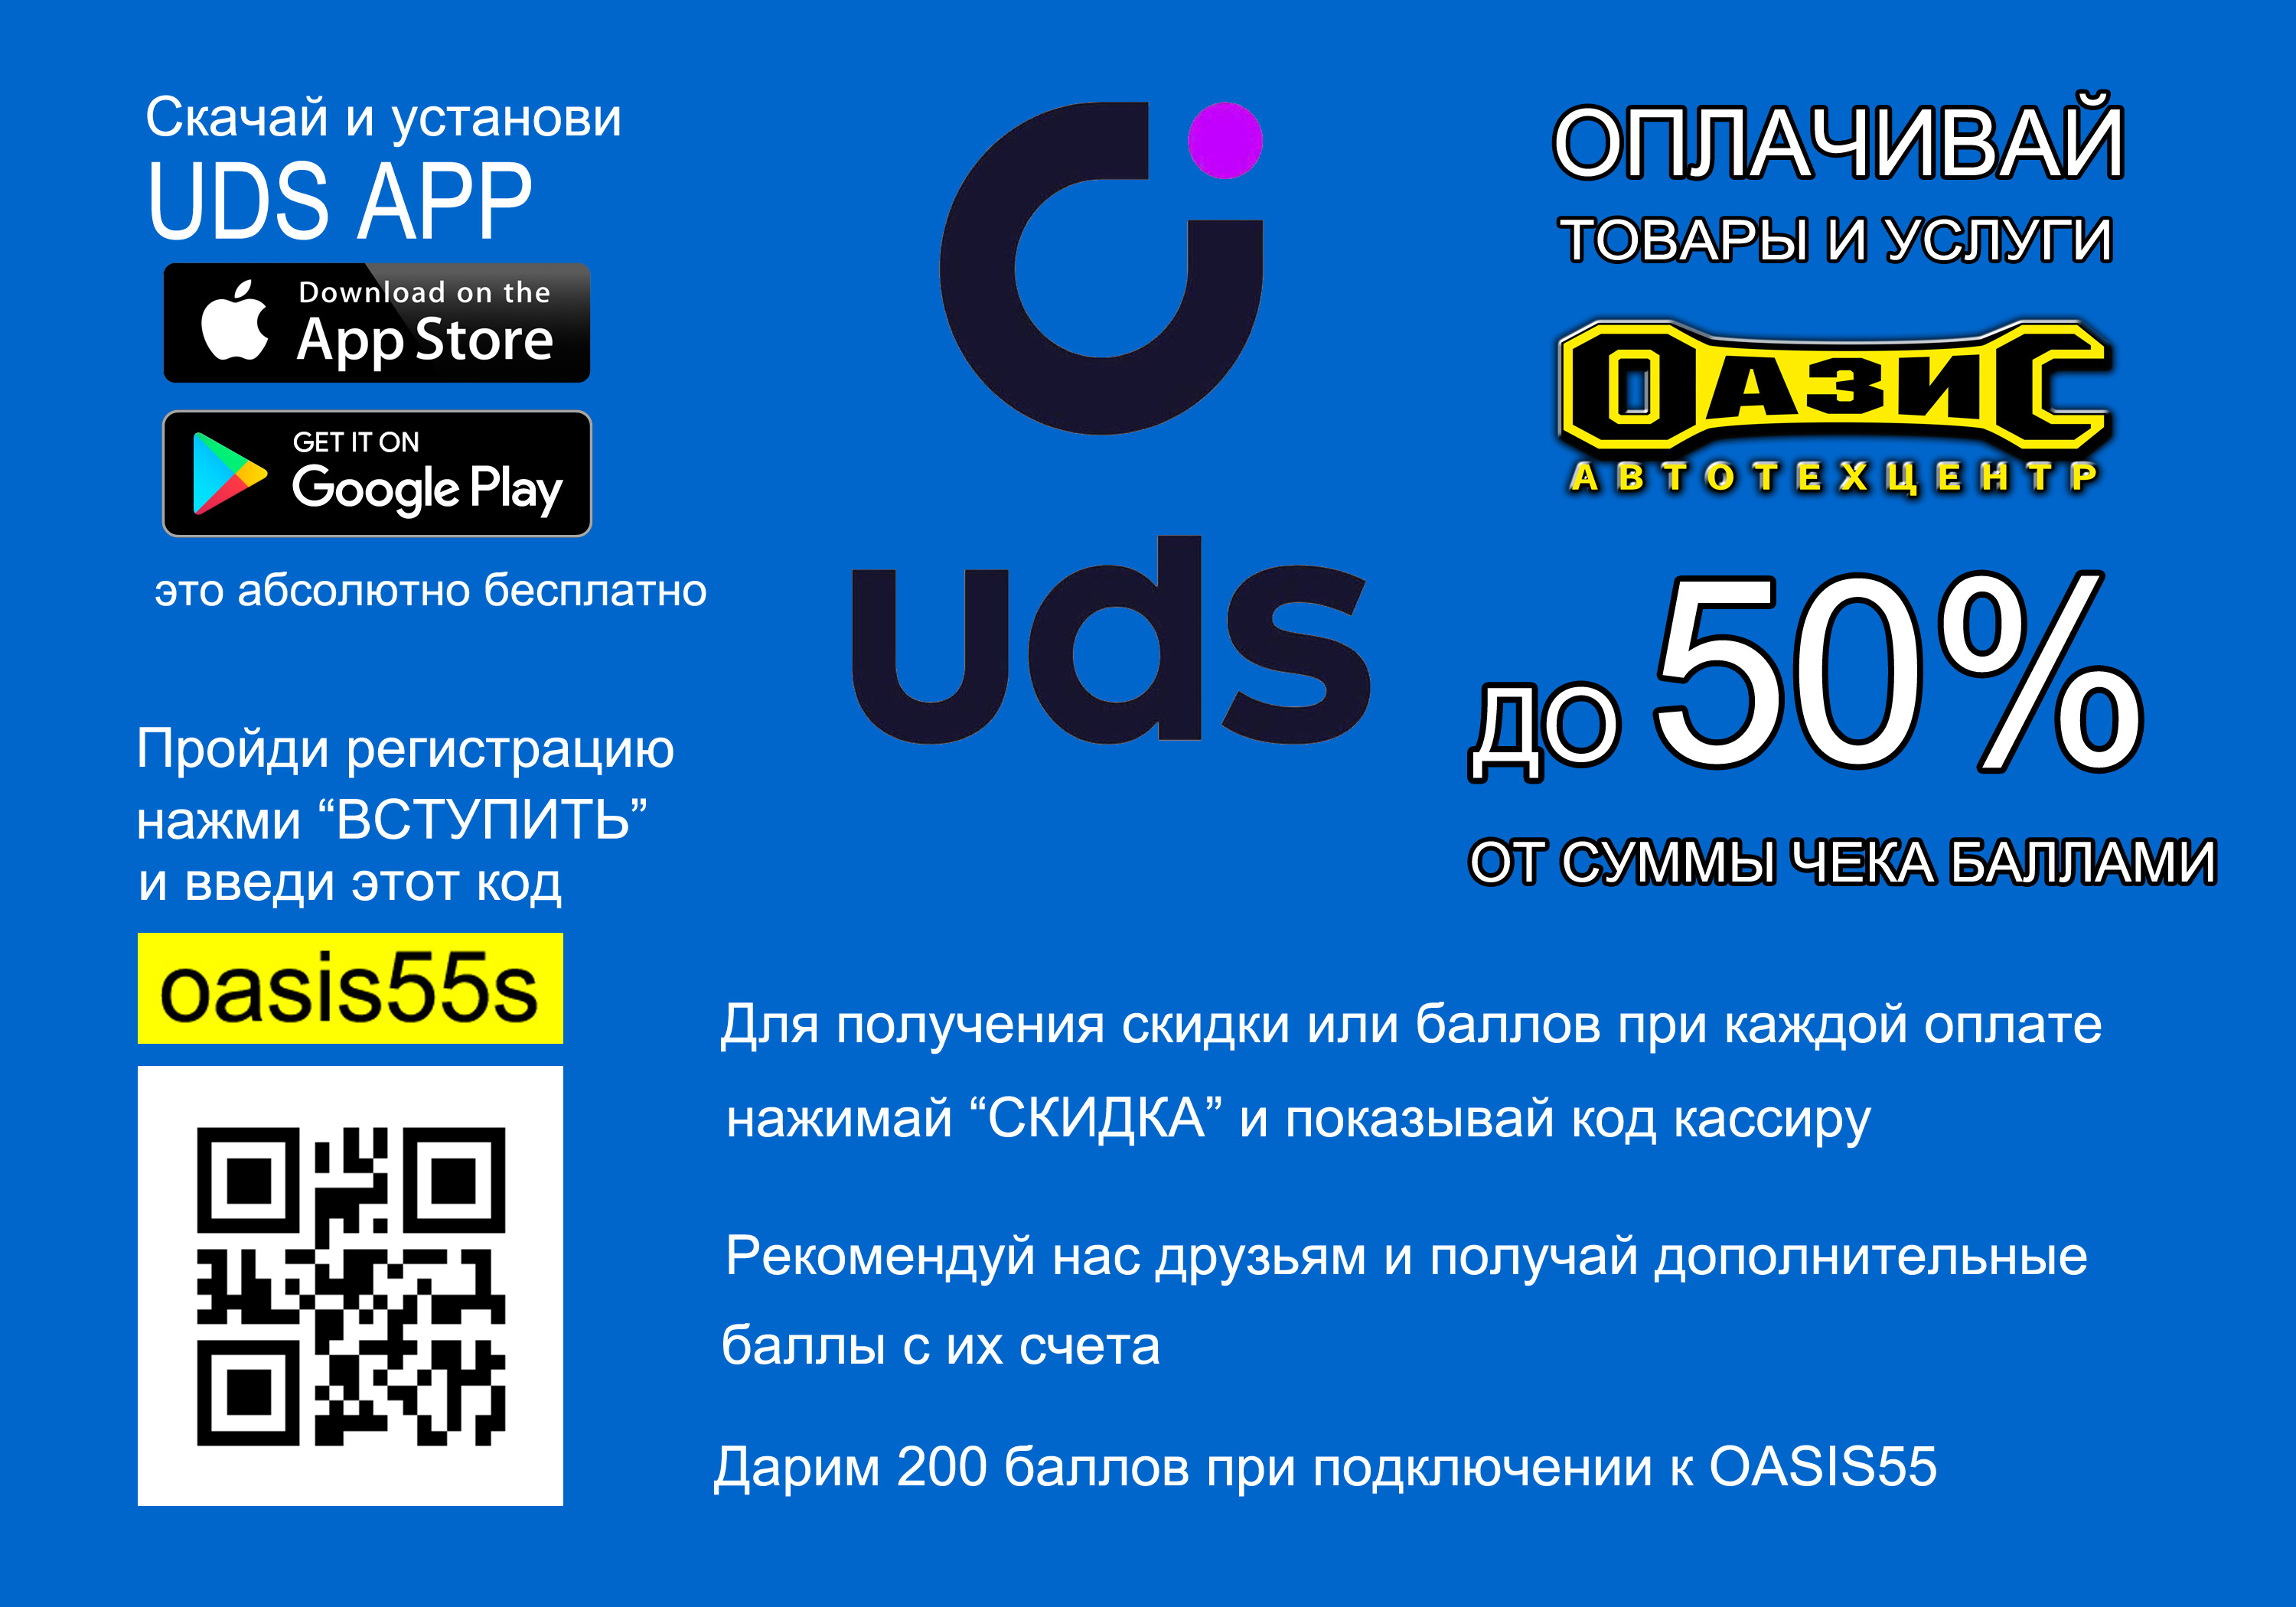 UDS Game - Экономь до 50%